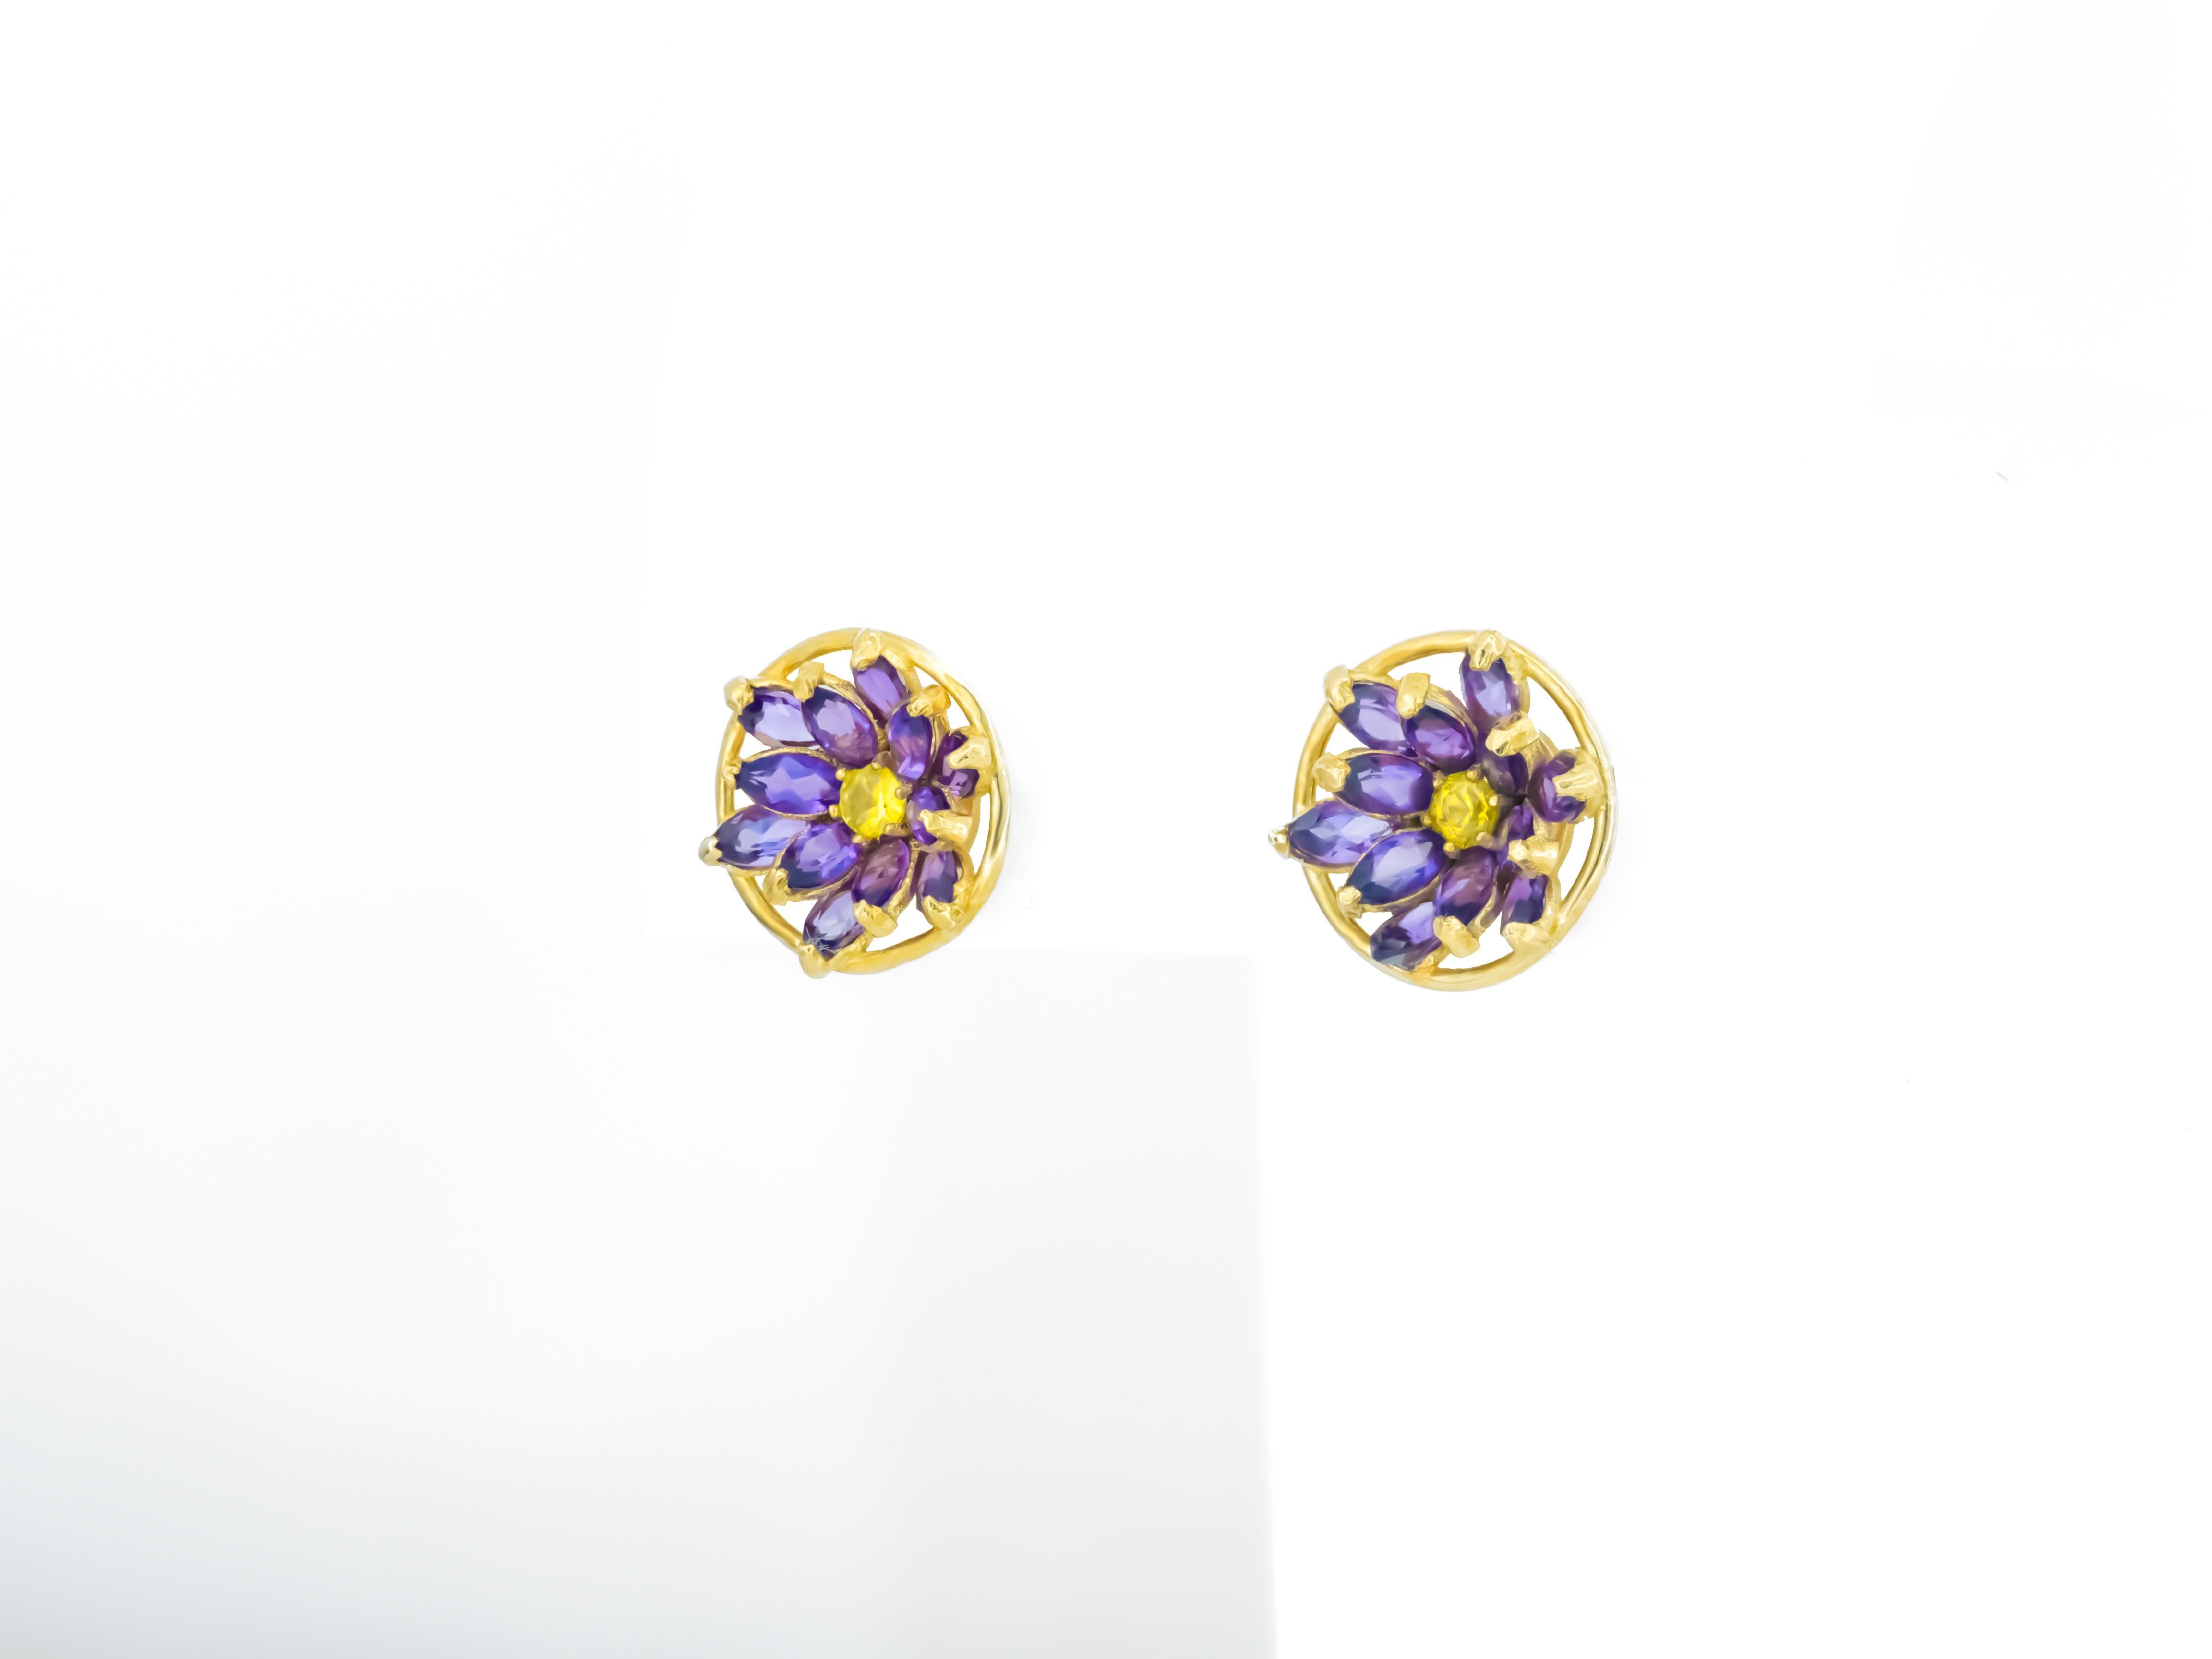 Lotus Flower Earrings Studs in 14k Gold, Amethyst and Sapphires Earrings For Sale 4